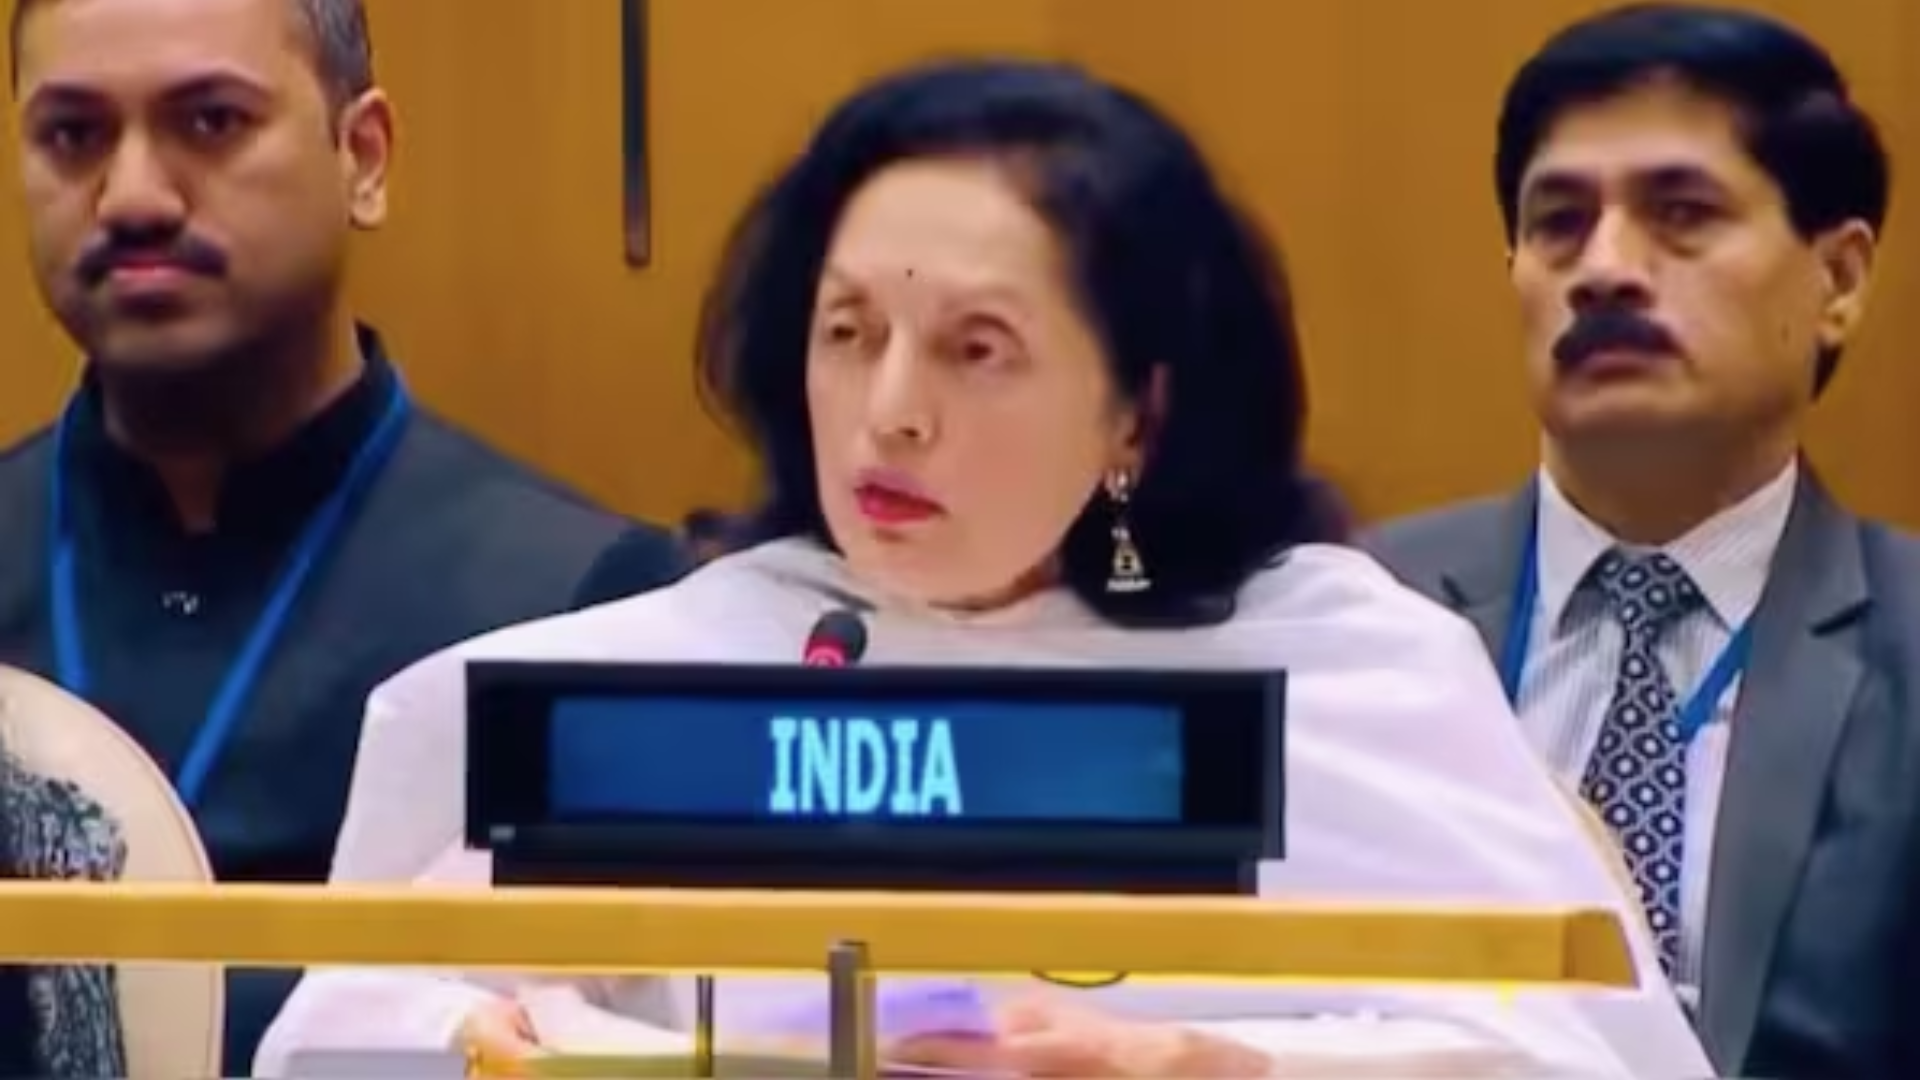 India Slams Pakistan at UNGA Over CAA, Ram Temple Remarks